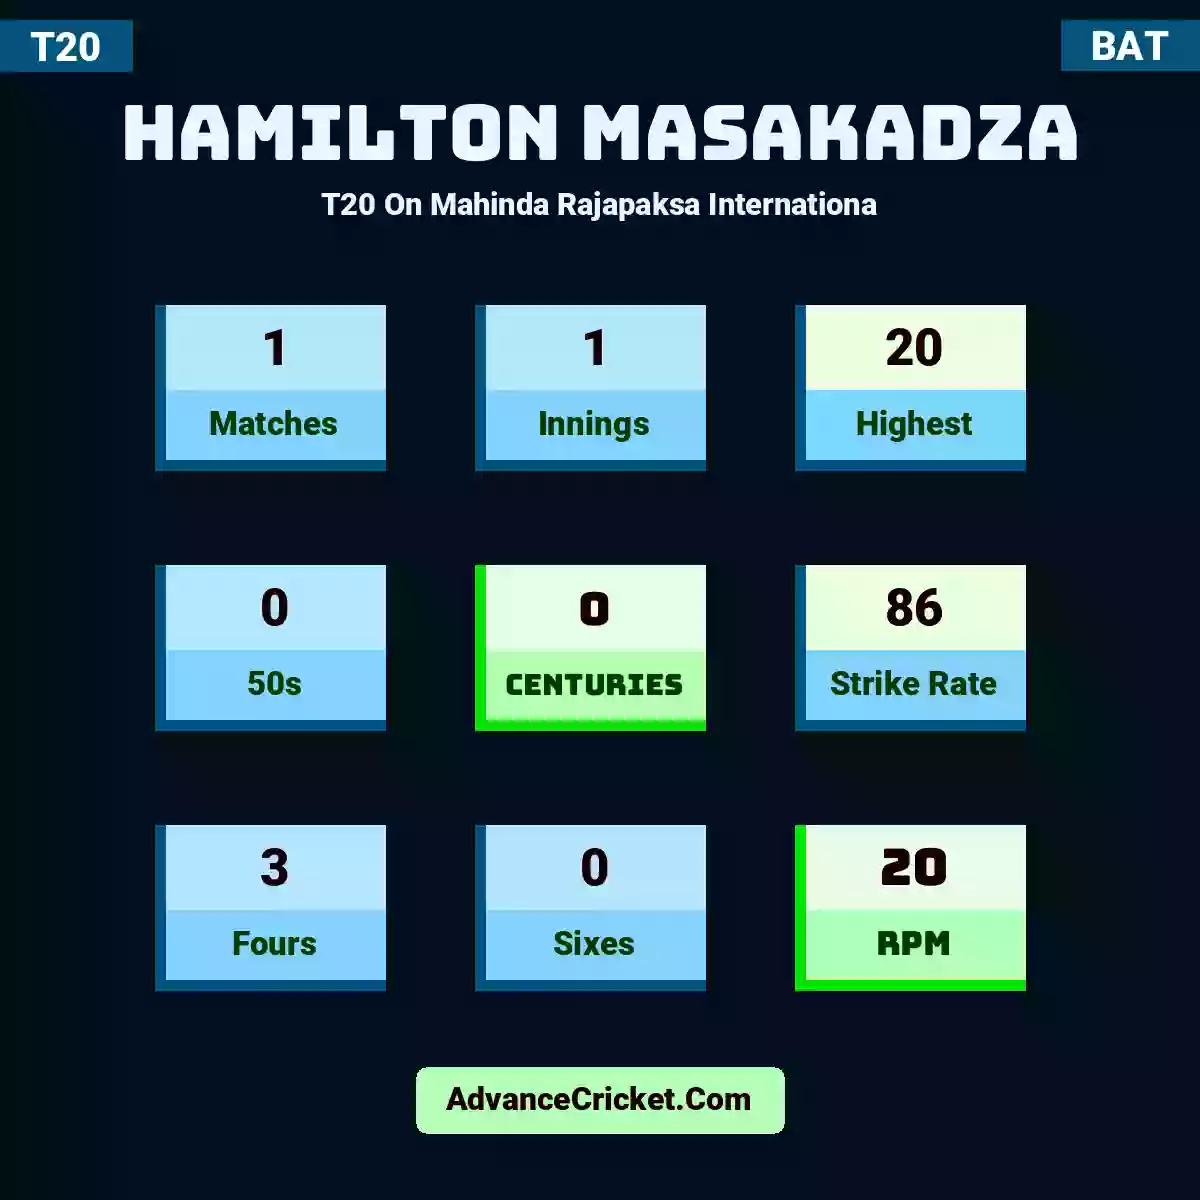 Hamilton Masakadza T20  On Mahinda Rajapaksa Internationa, Hamilton Masakadza played 1 matches, scored 20 runs as highest, 0 half-centuries, and 0 centuries, with a strike rate of 86. H.Masakadza hit 3 fours and 0 sixes, with an RPM of 20.